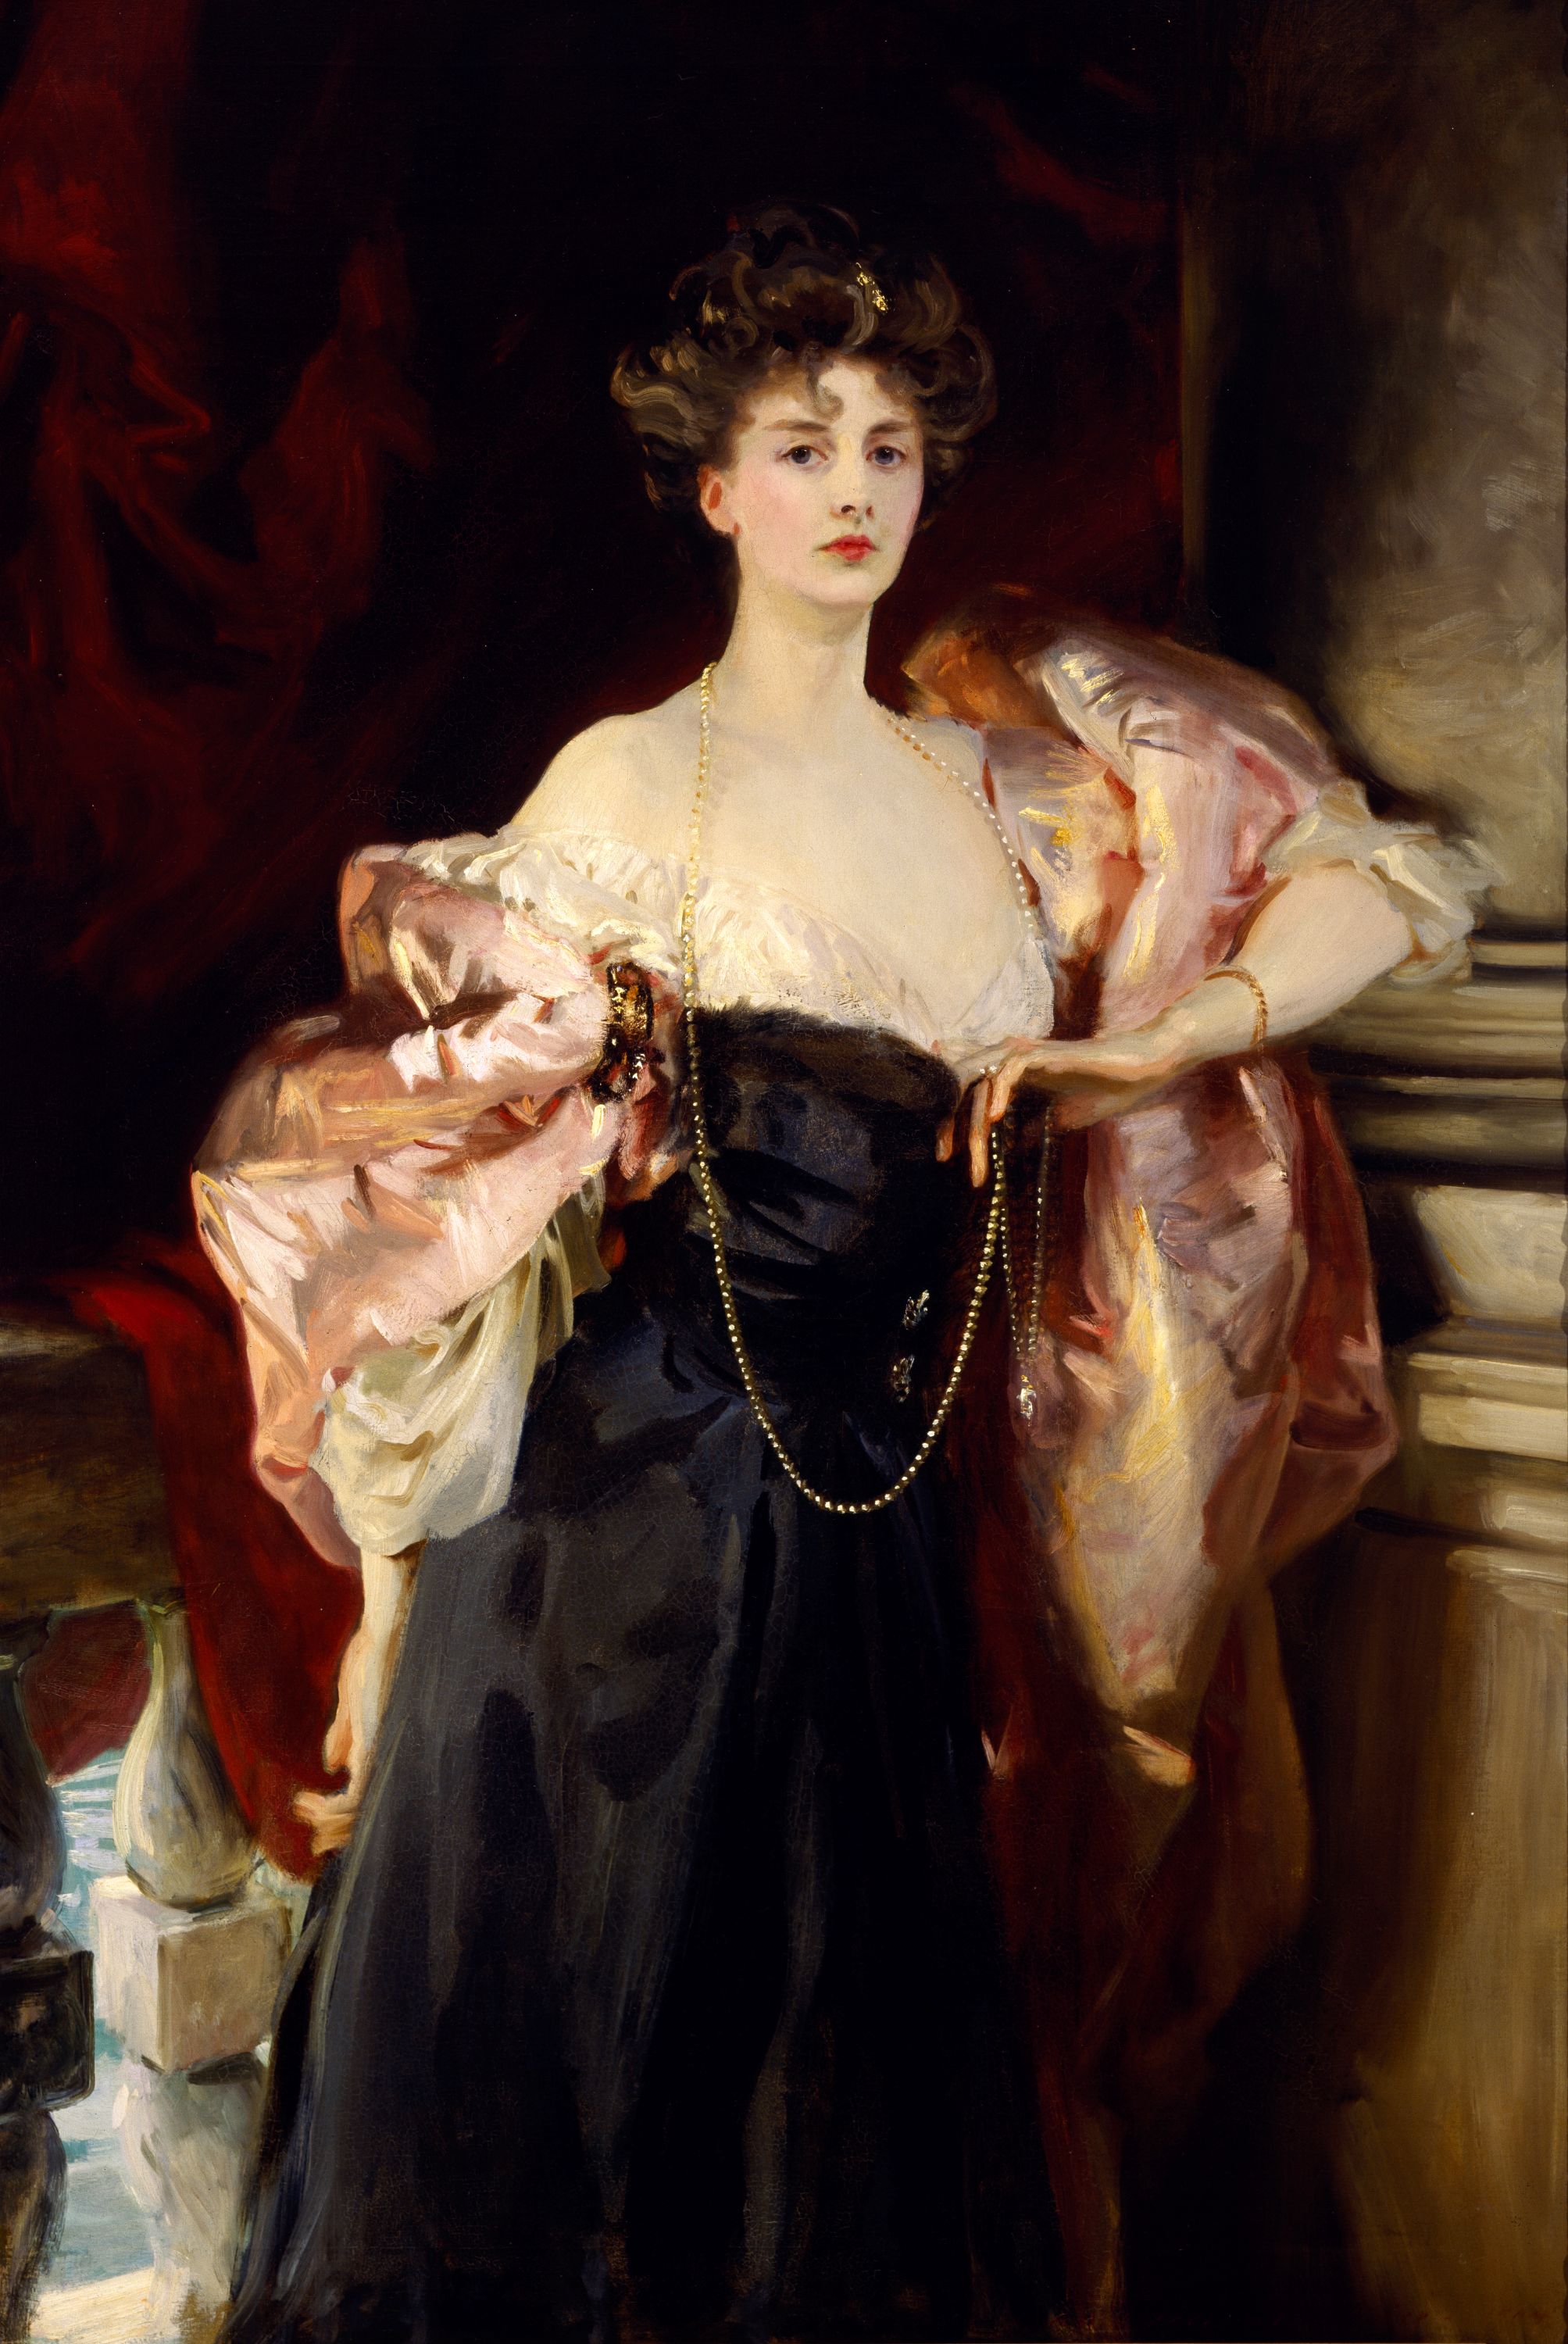 Helen Vincent, Viscountess D'Abernon by John Singer Sargent - 1904 - 157.4 x 101.6 cm Birmingham Museum of Art